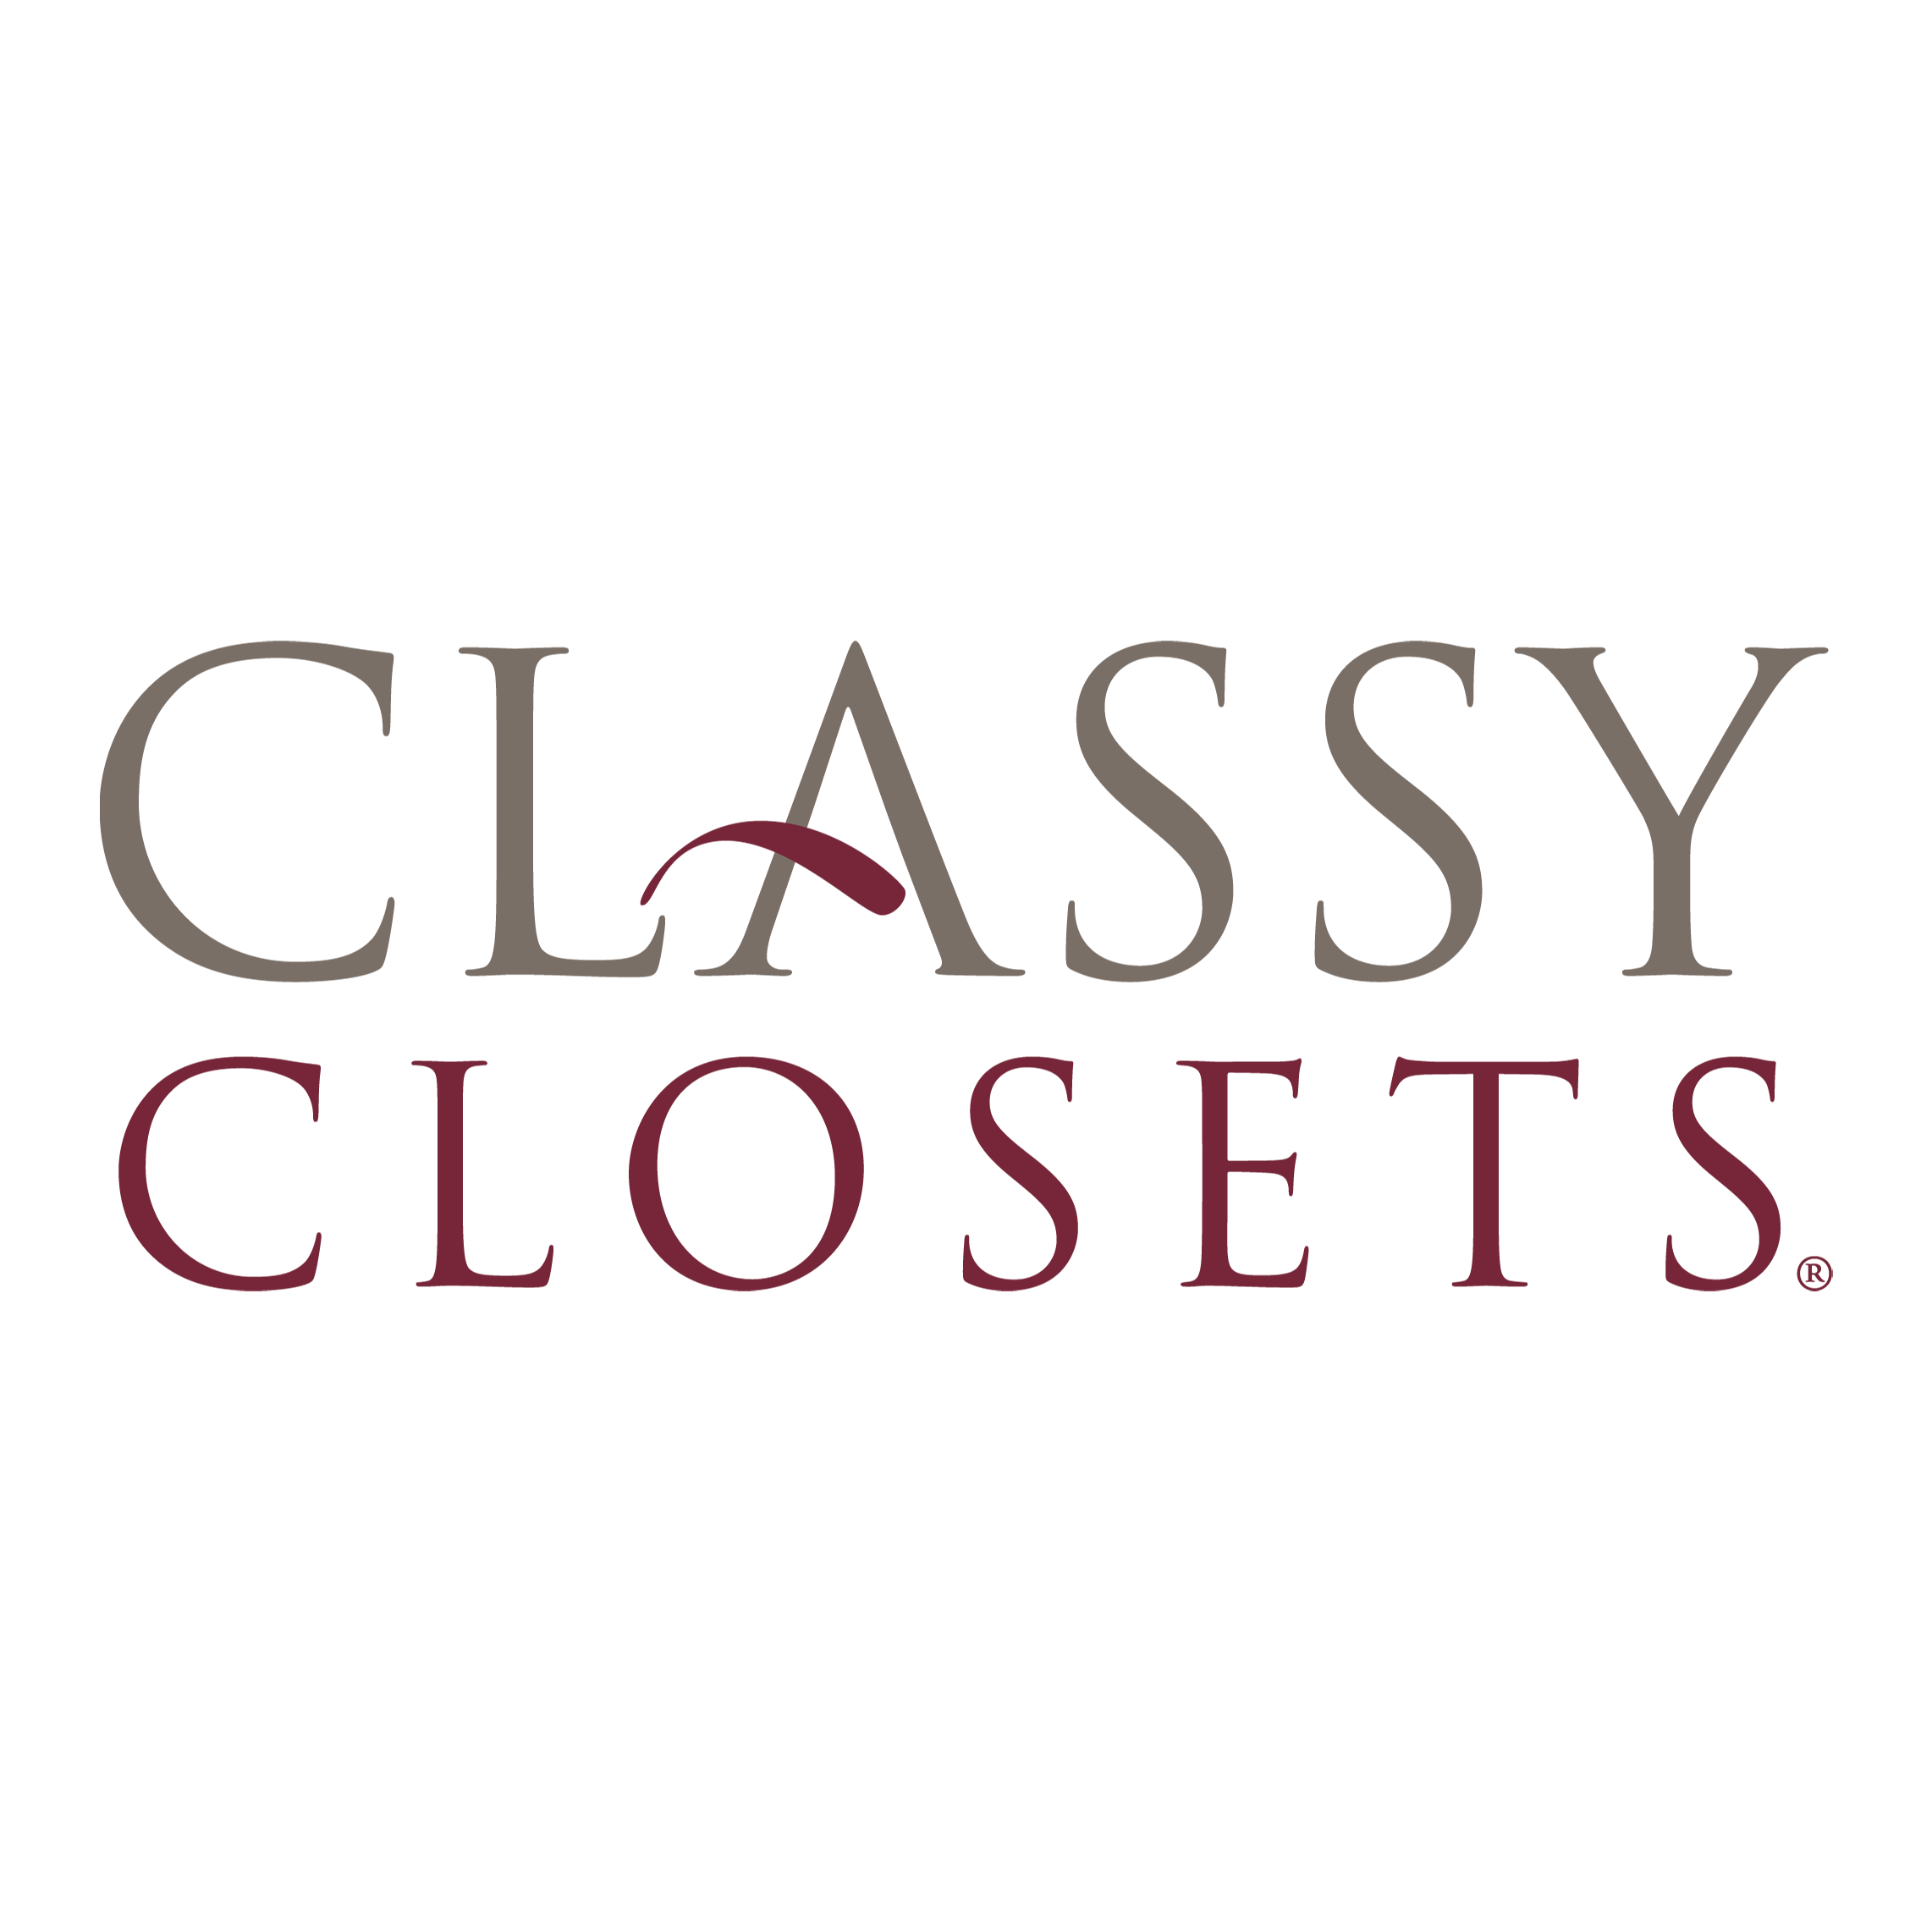 Classy Closets Logo